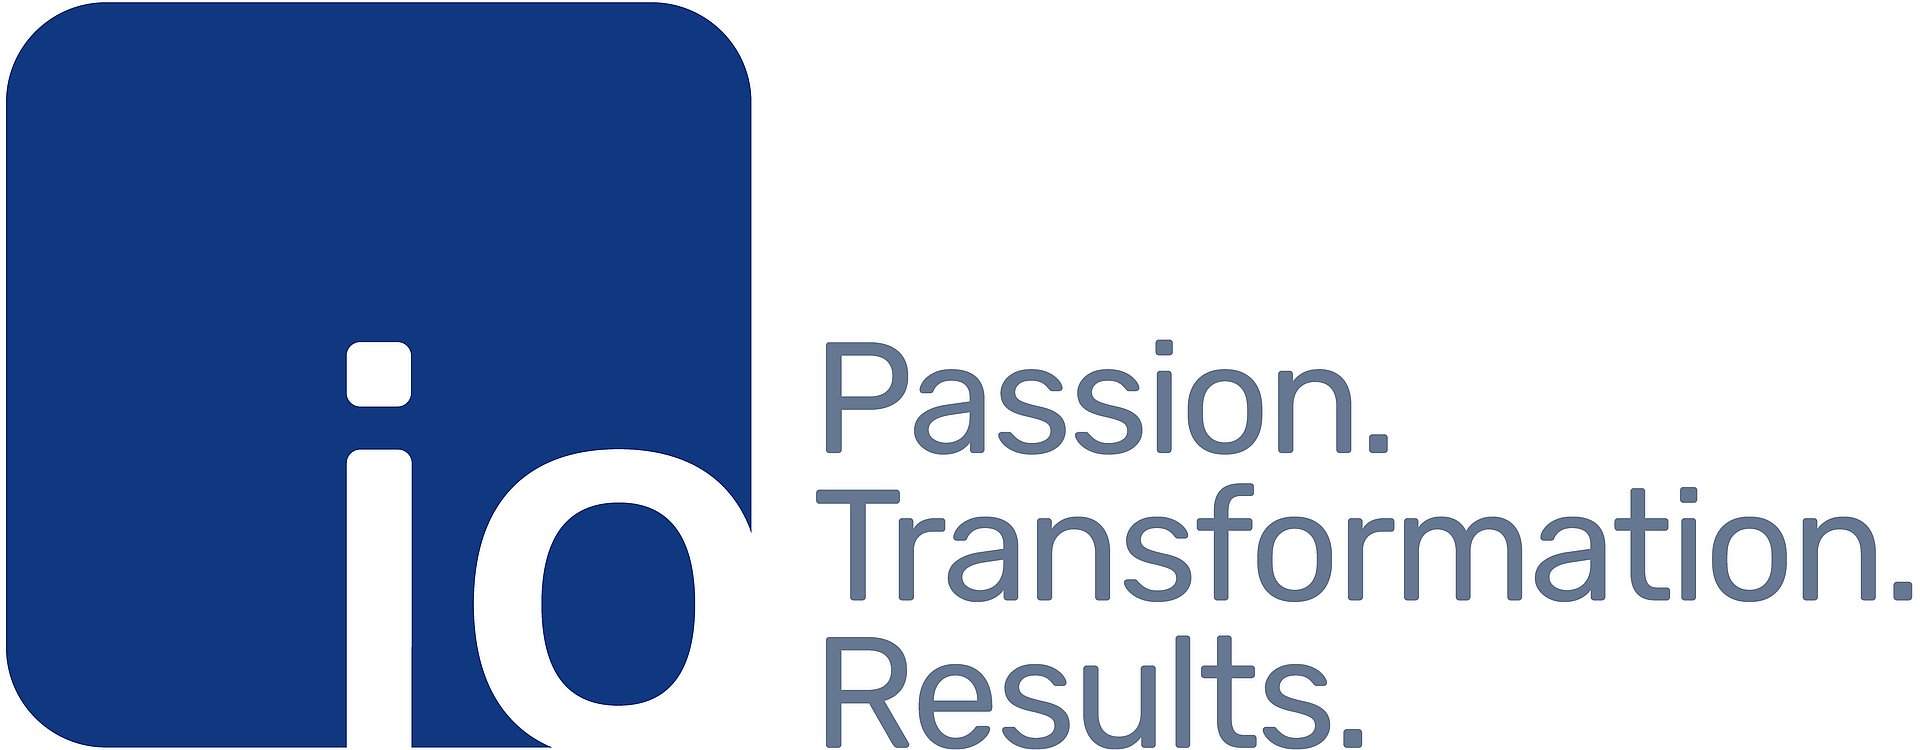 io-Logo mit Claim: Passion. Transformation. Results.